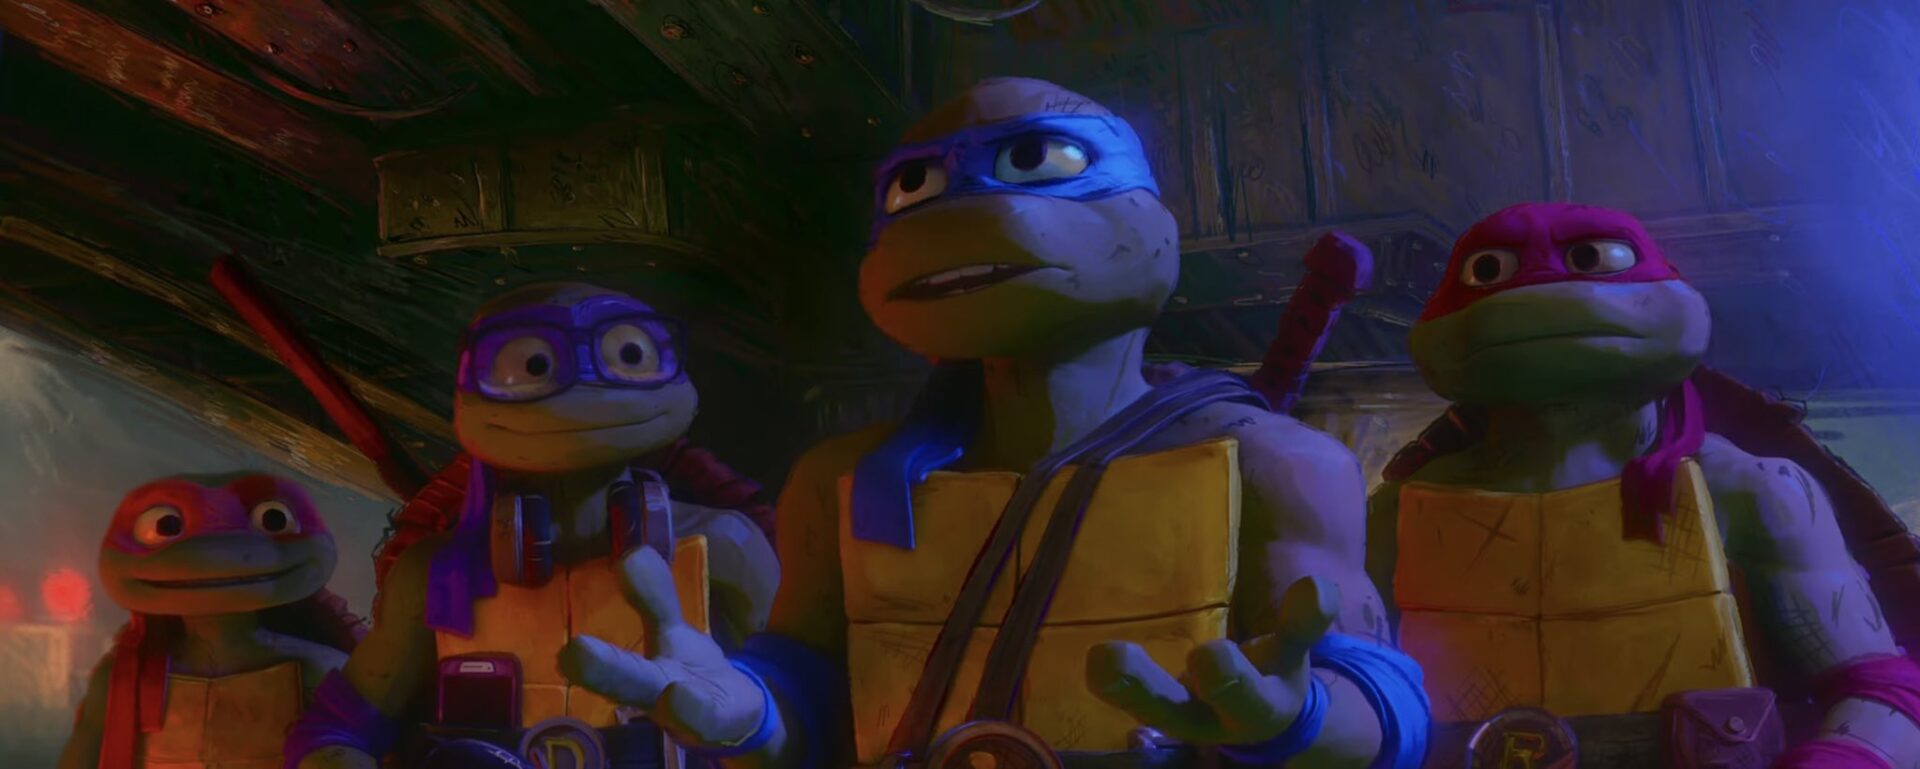 NEW Trailer for ‘Teenage Mutant Ninja Turtles: Mutant Mayhem’ coming to theaters on August 4th